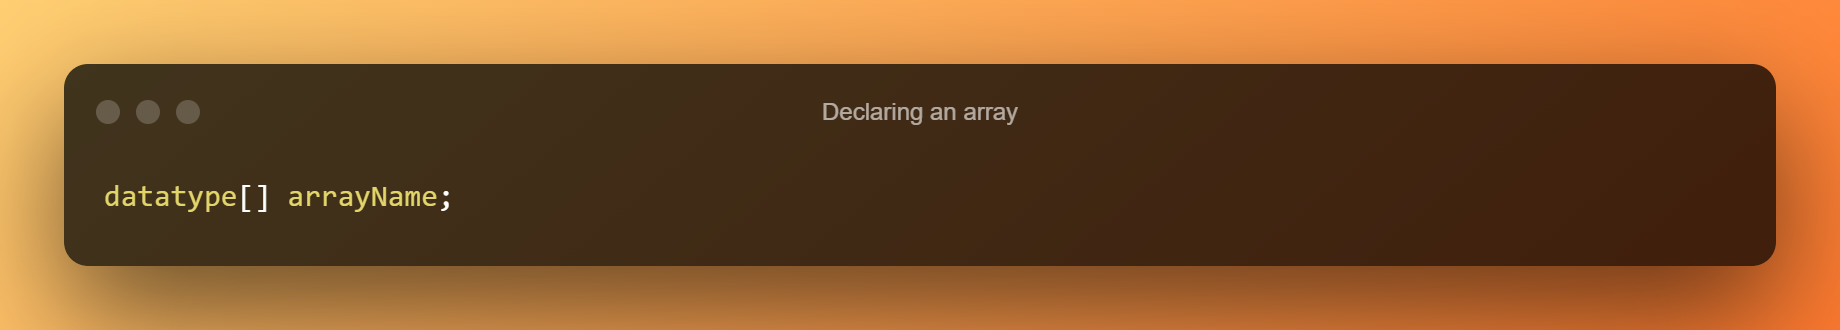 Declaring An Array